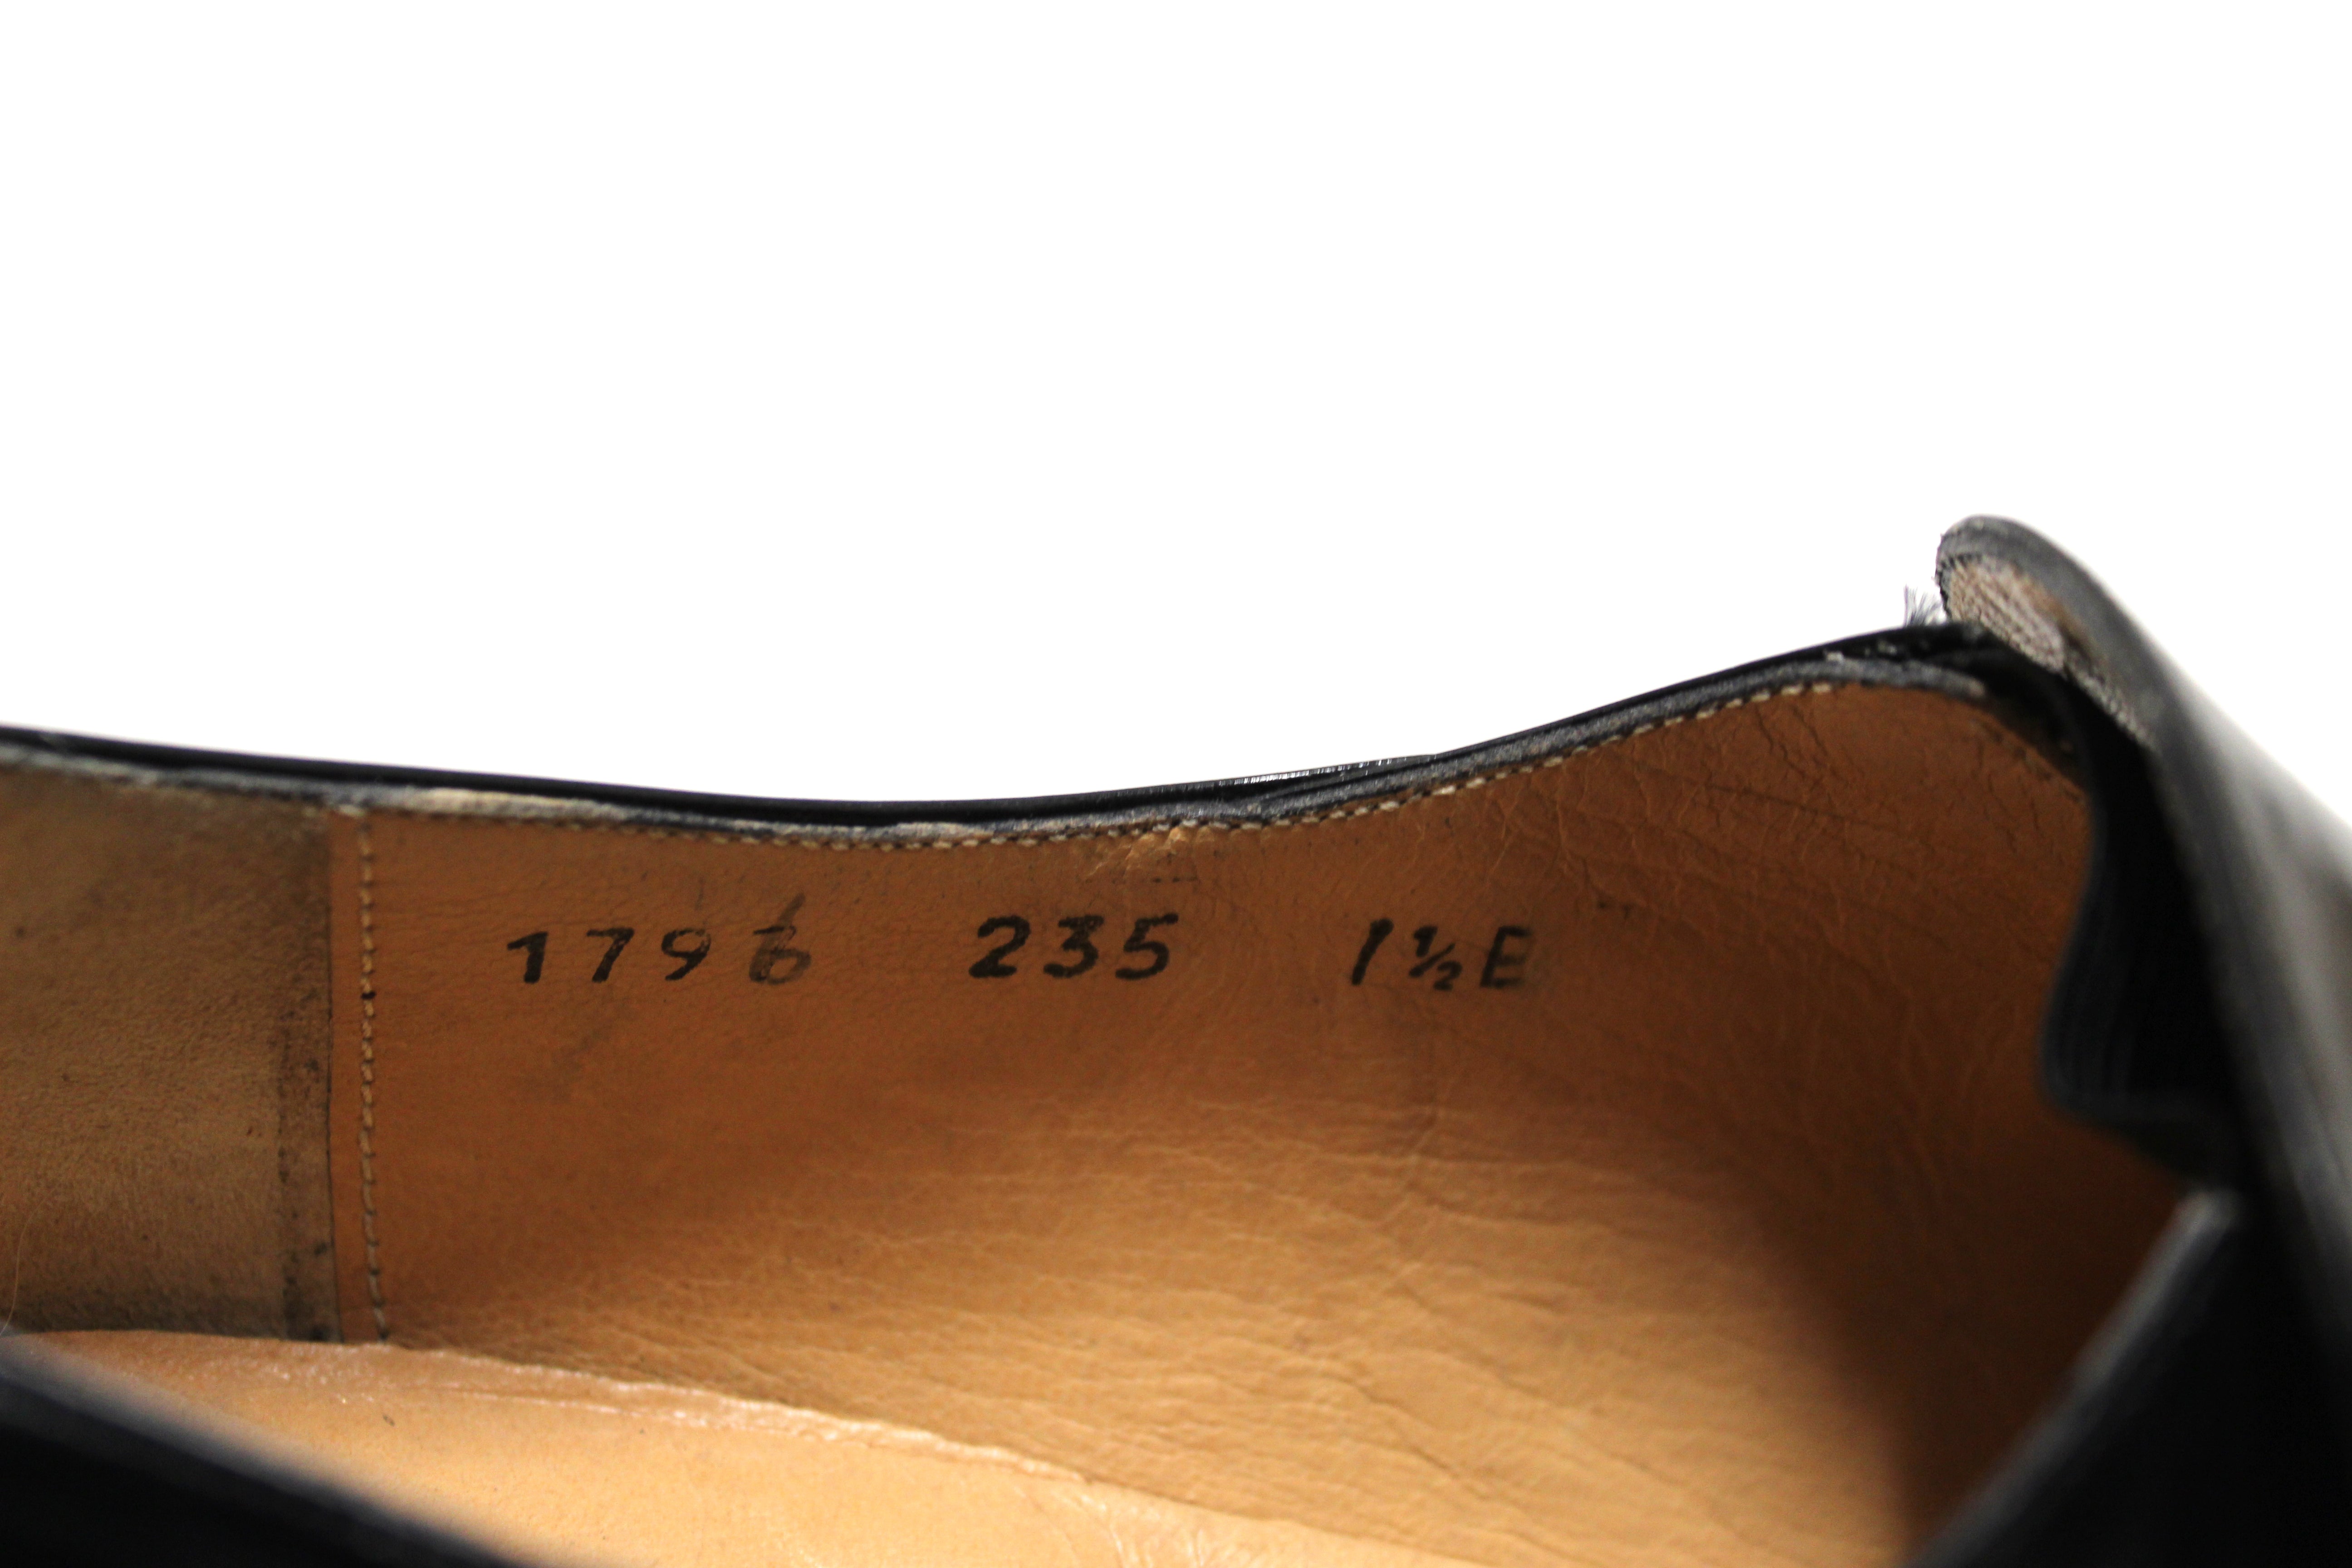 Authentic Salvatore Ferrgamo Men's Black Calf Leather Loafer Dress Shoes size 7.5